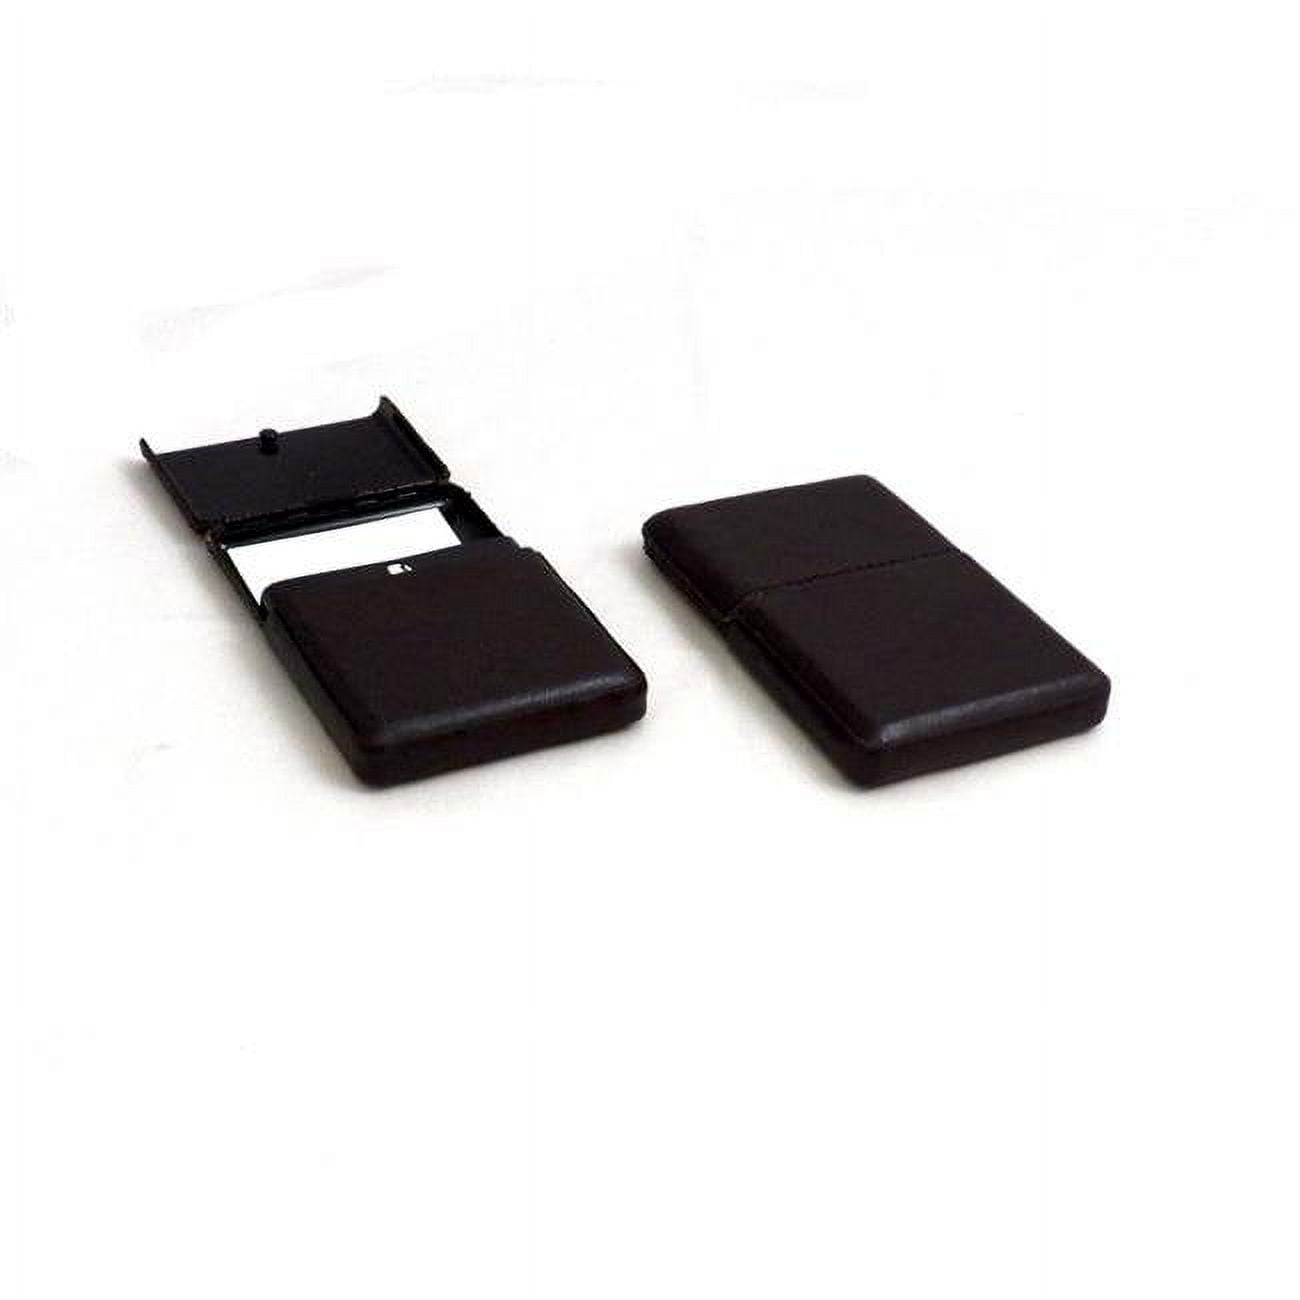 Bey-berk International D251n Brown Leather Business Card Case With Flip Top